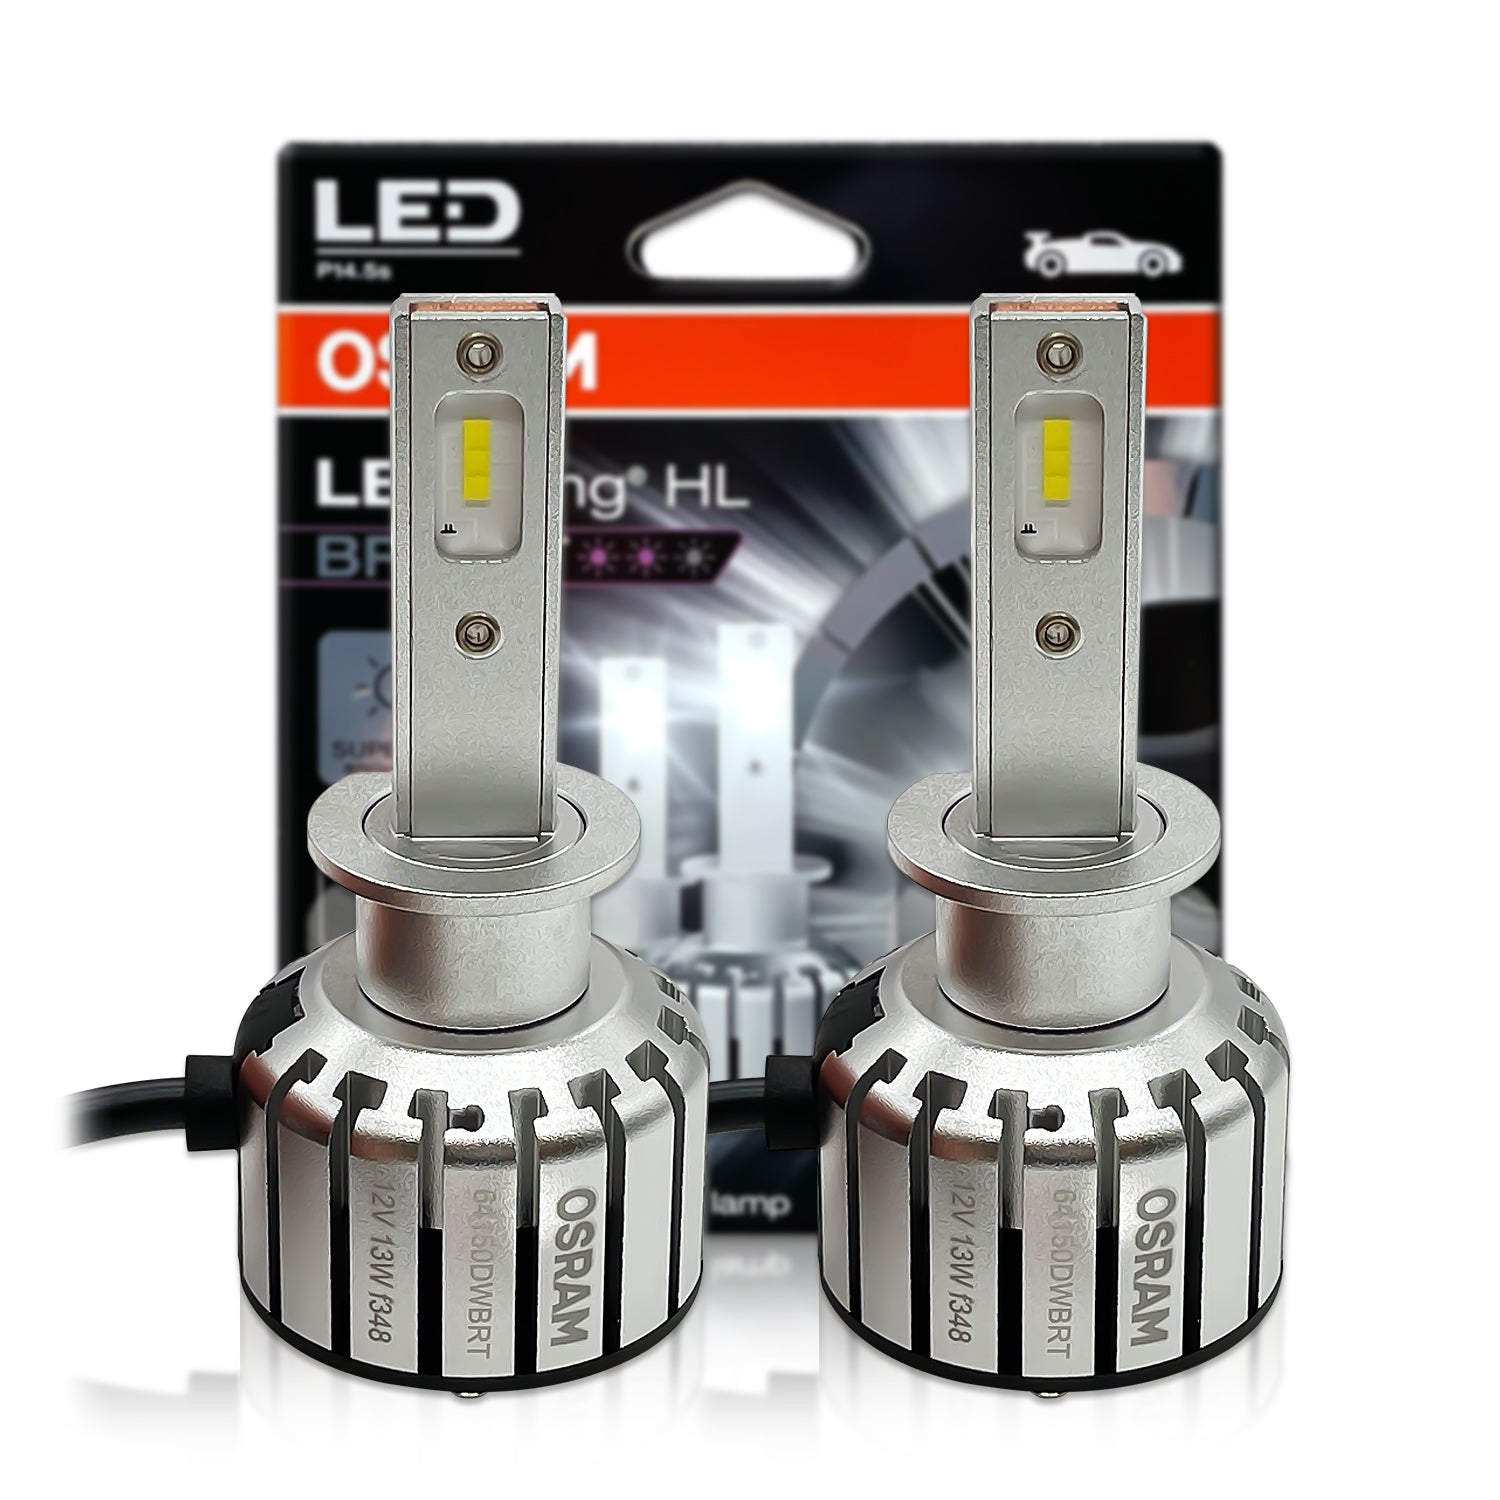 H1: Osram 64150DWBRT-2HFB LEDriving HL Bright LED Bulbs | Pack of 2